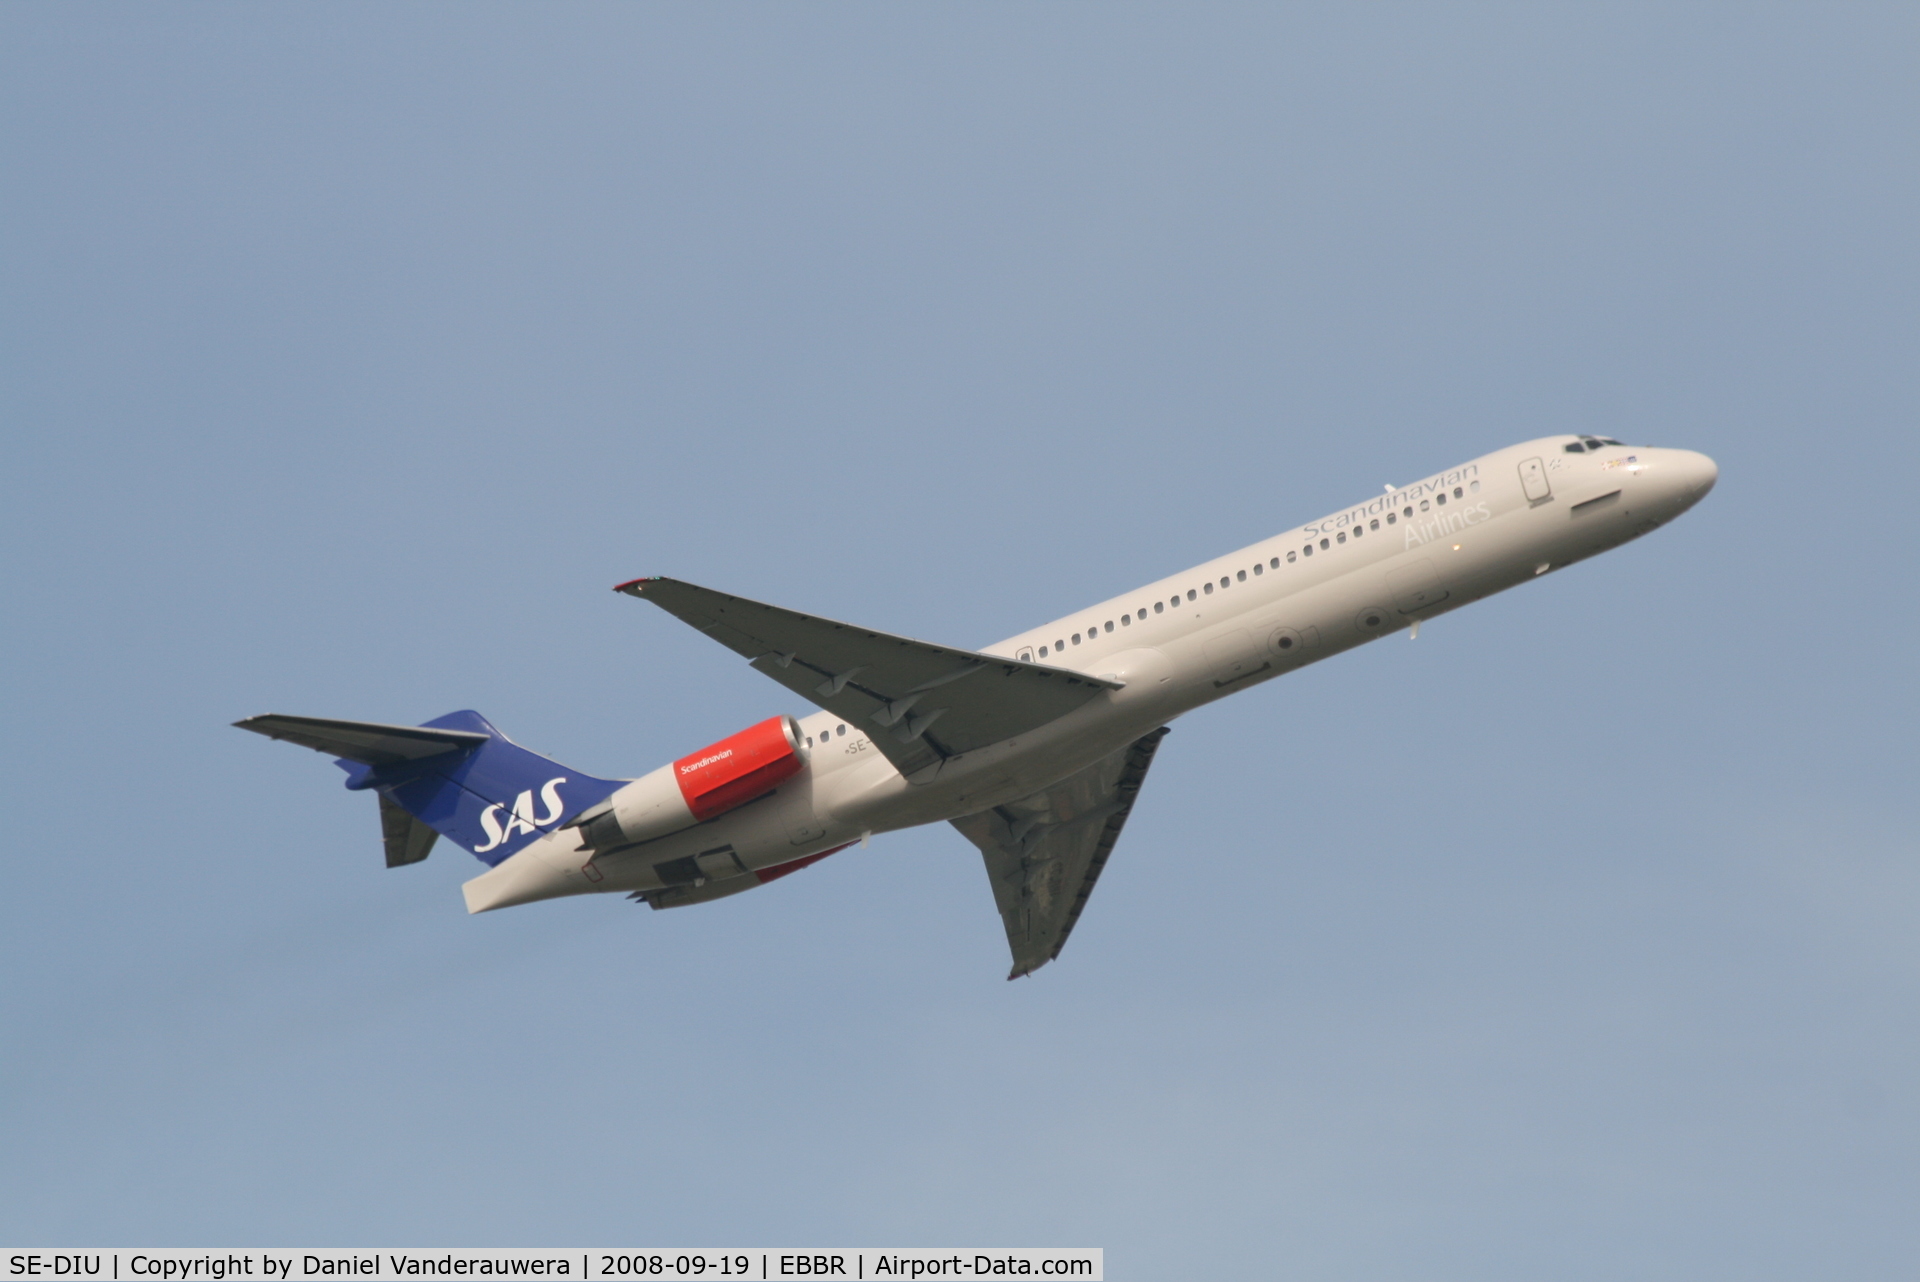 SE-DIU, 1991 McDonnell Douglas MD-87 (DC-9-87) C/N 53011, Flight SK594 is taking off from RWY 07R